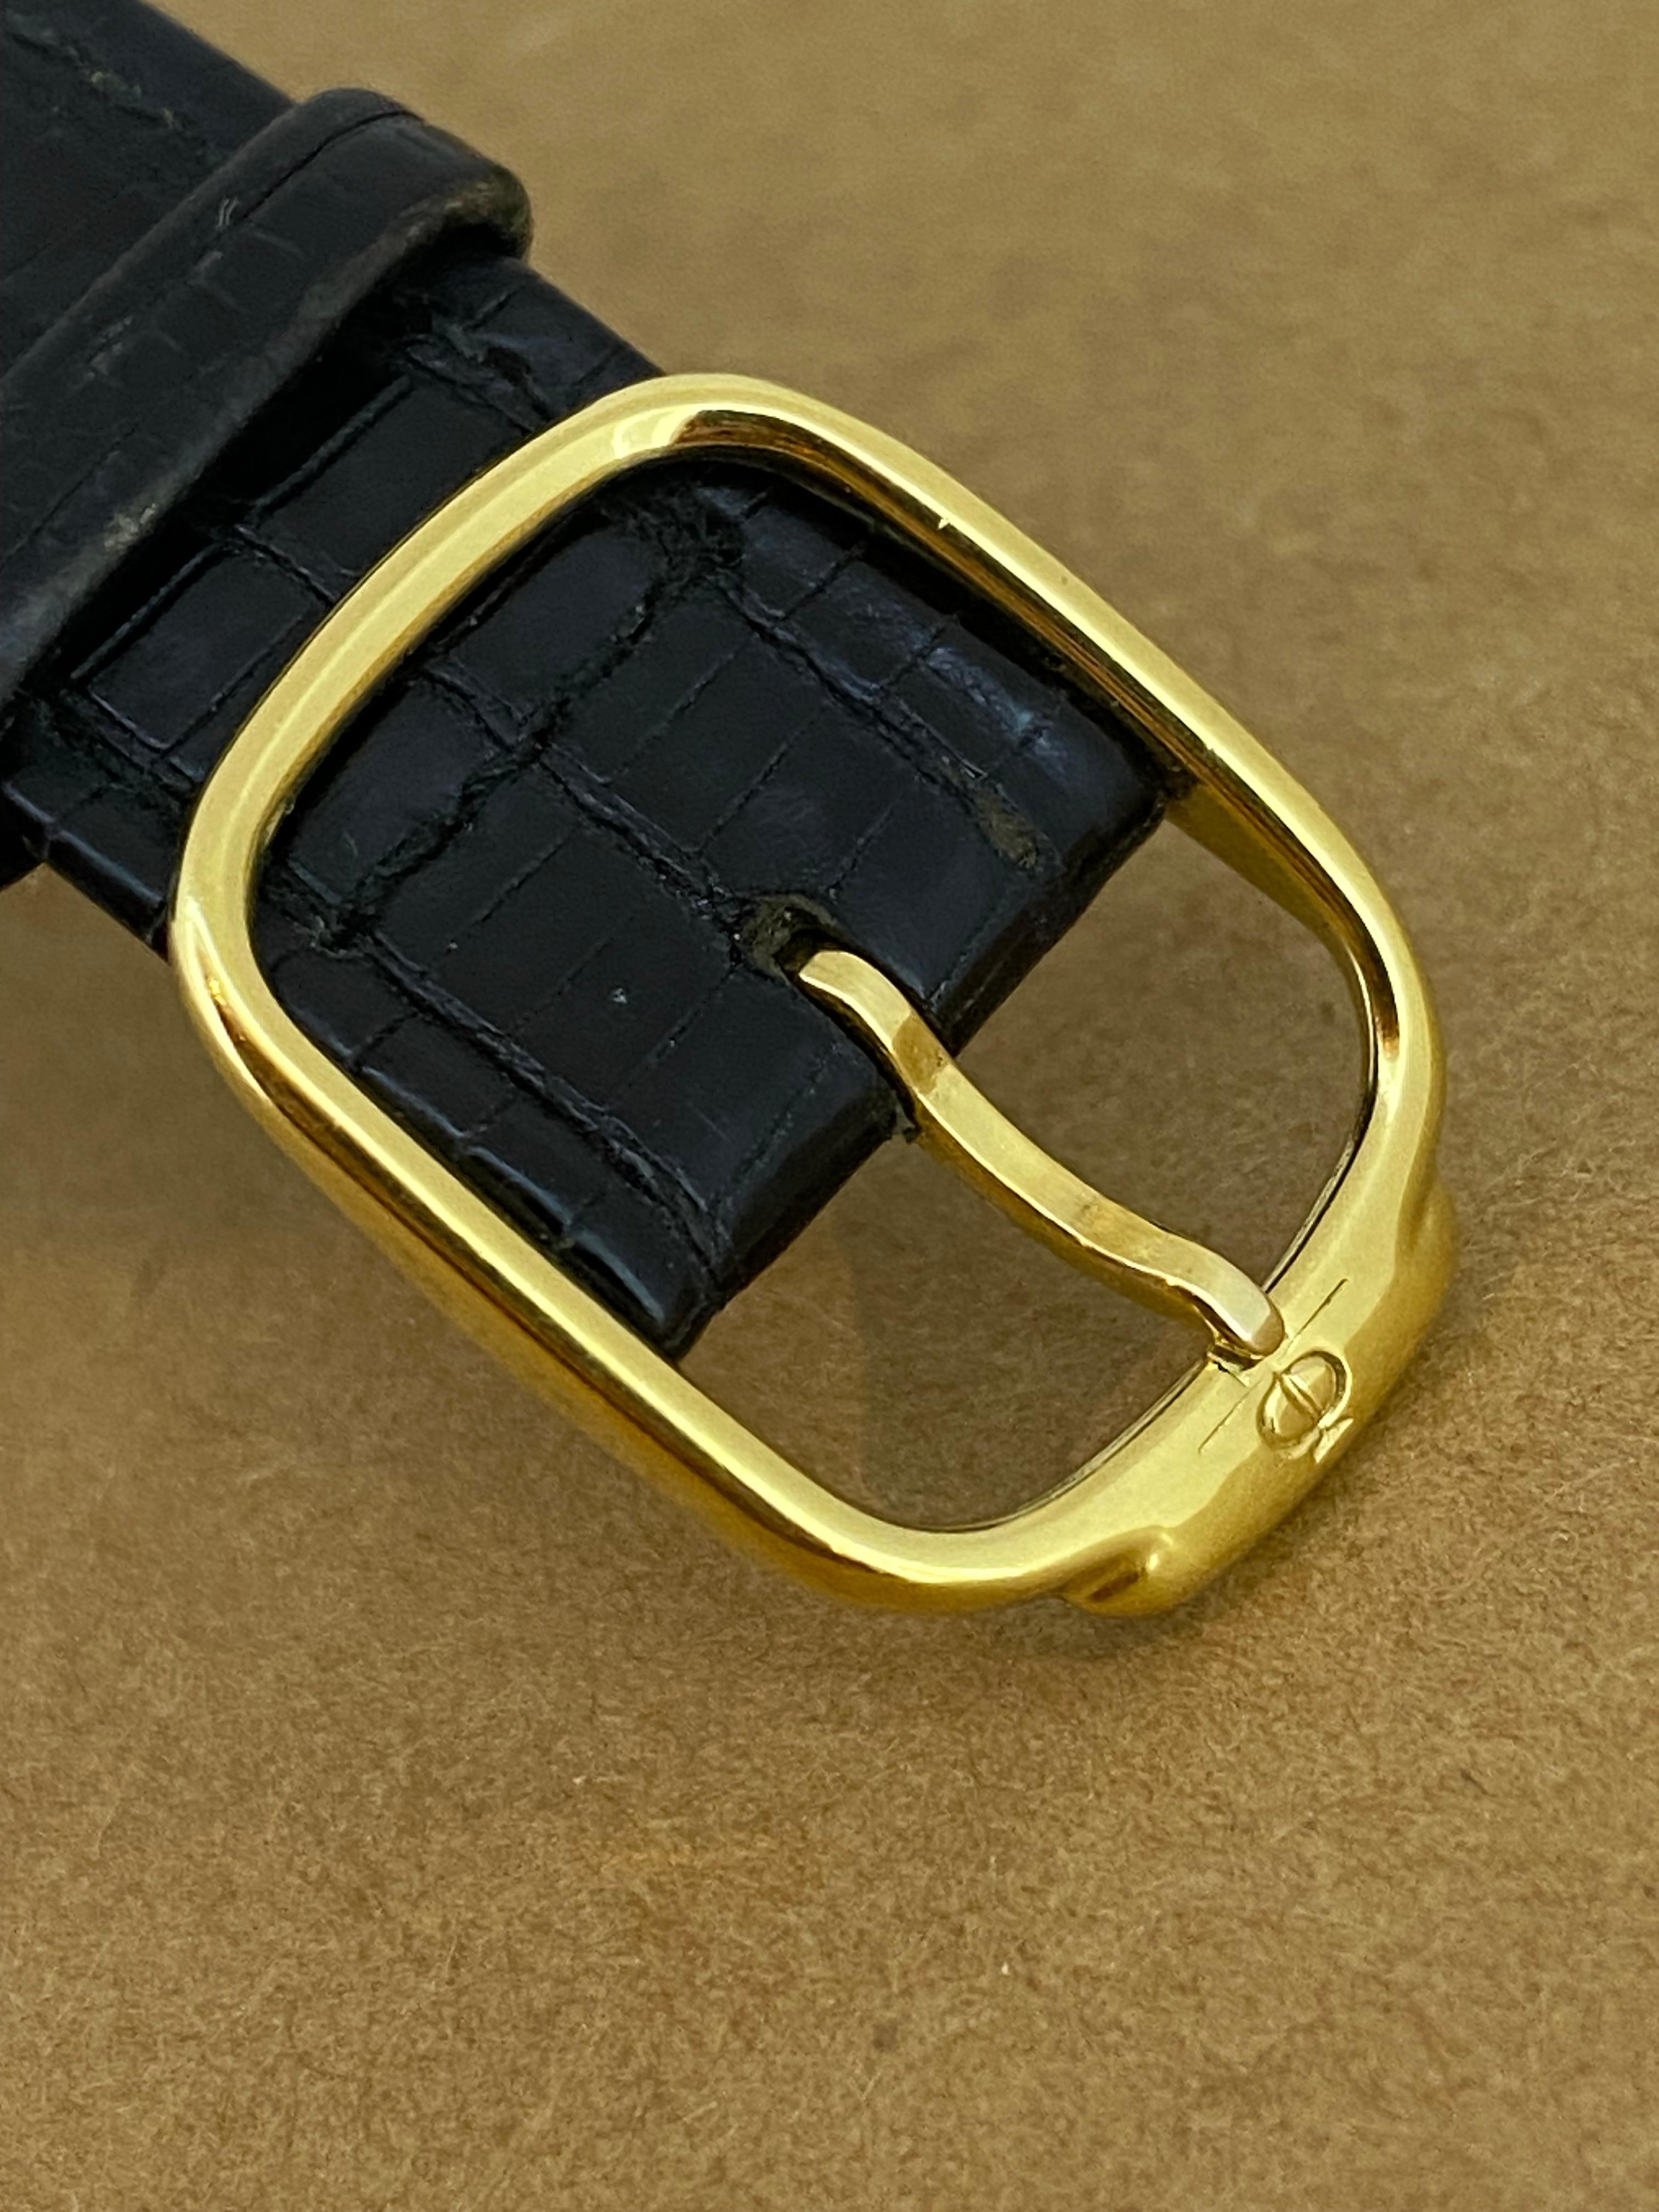 18K Yellow Gold Baume & Mercier Geneve ref 1830 Swiss Quartz Rectangle Watch 4